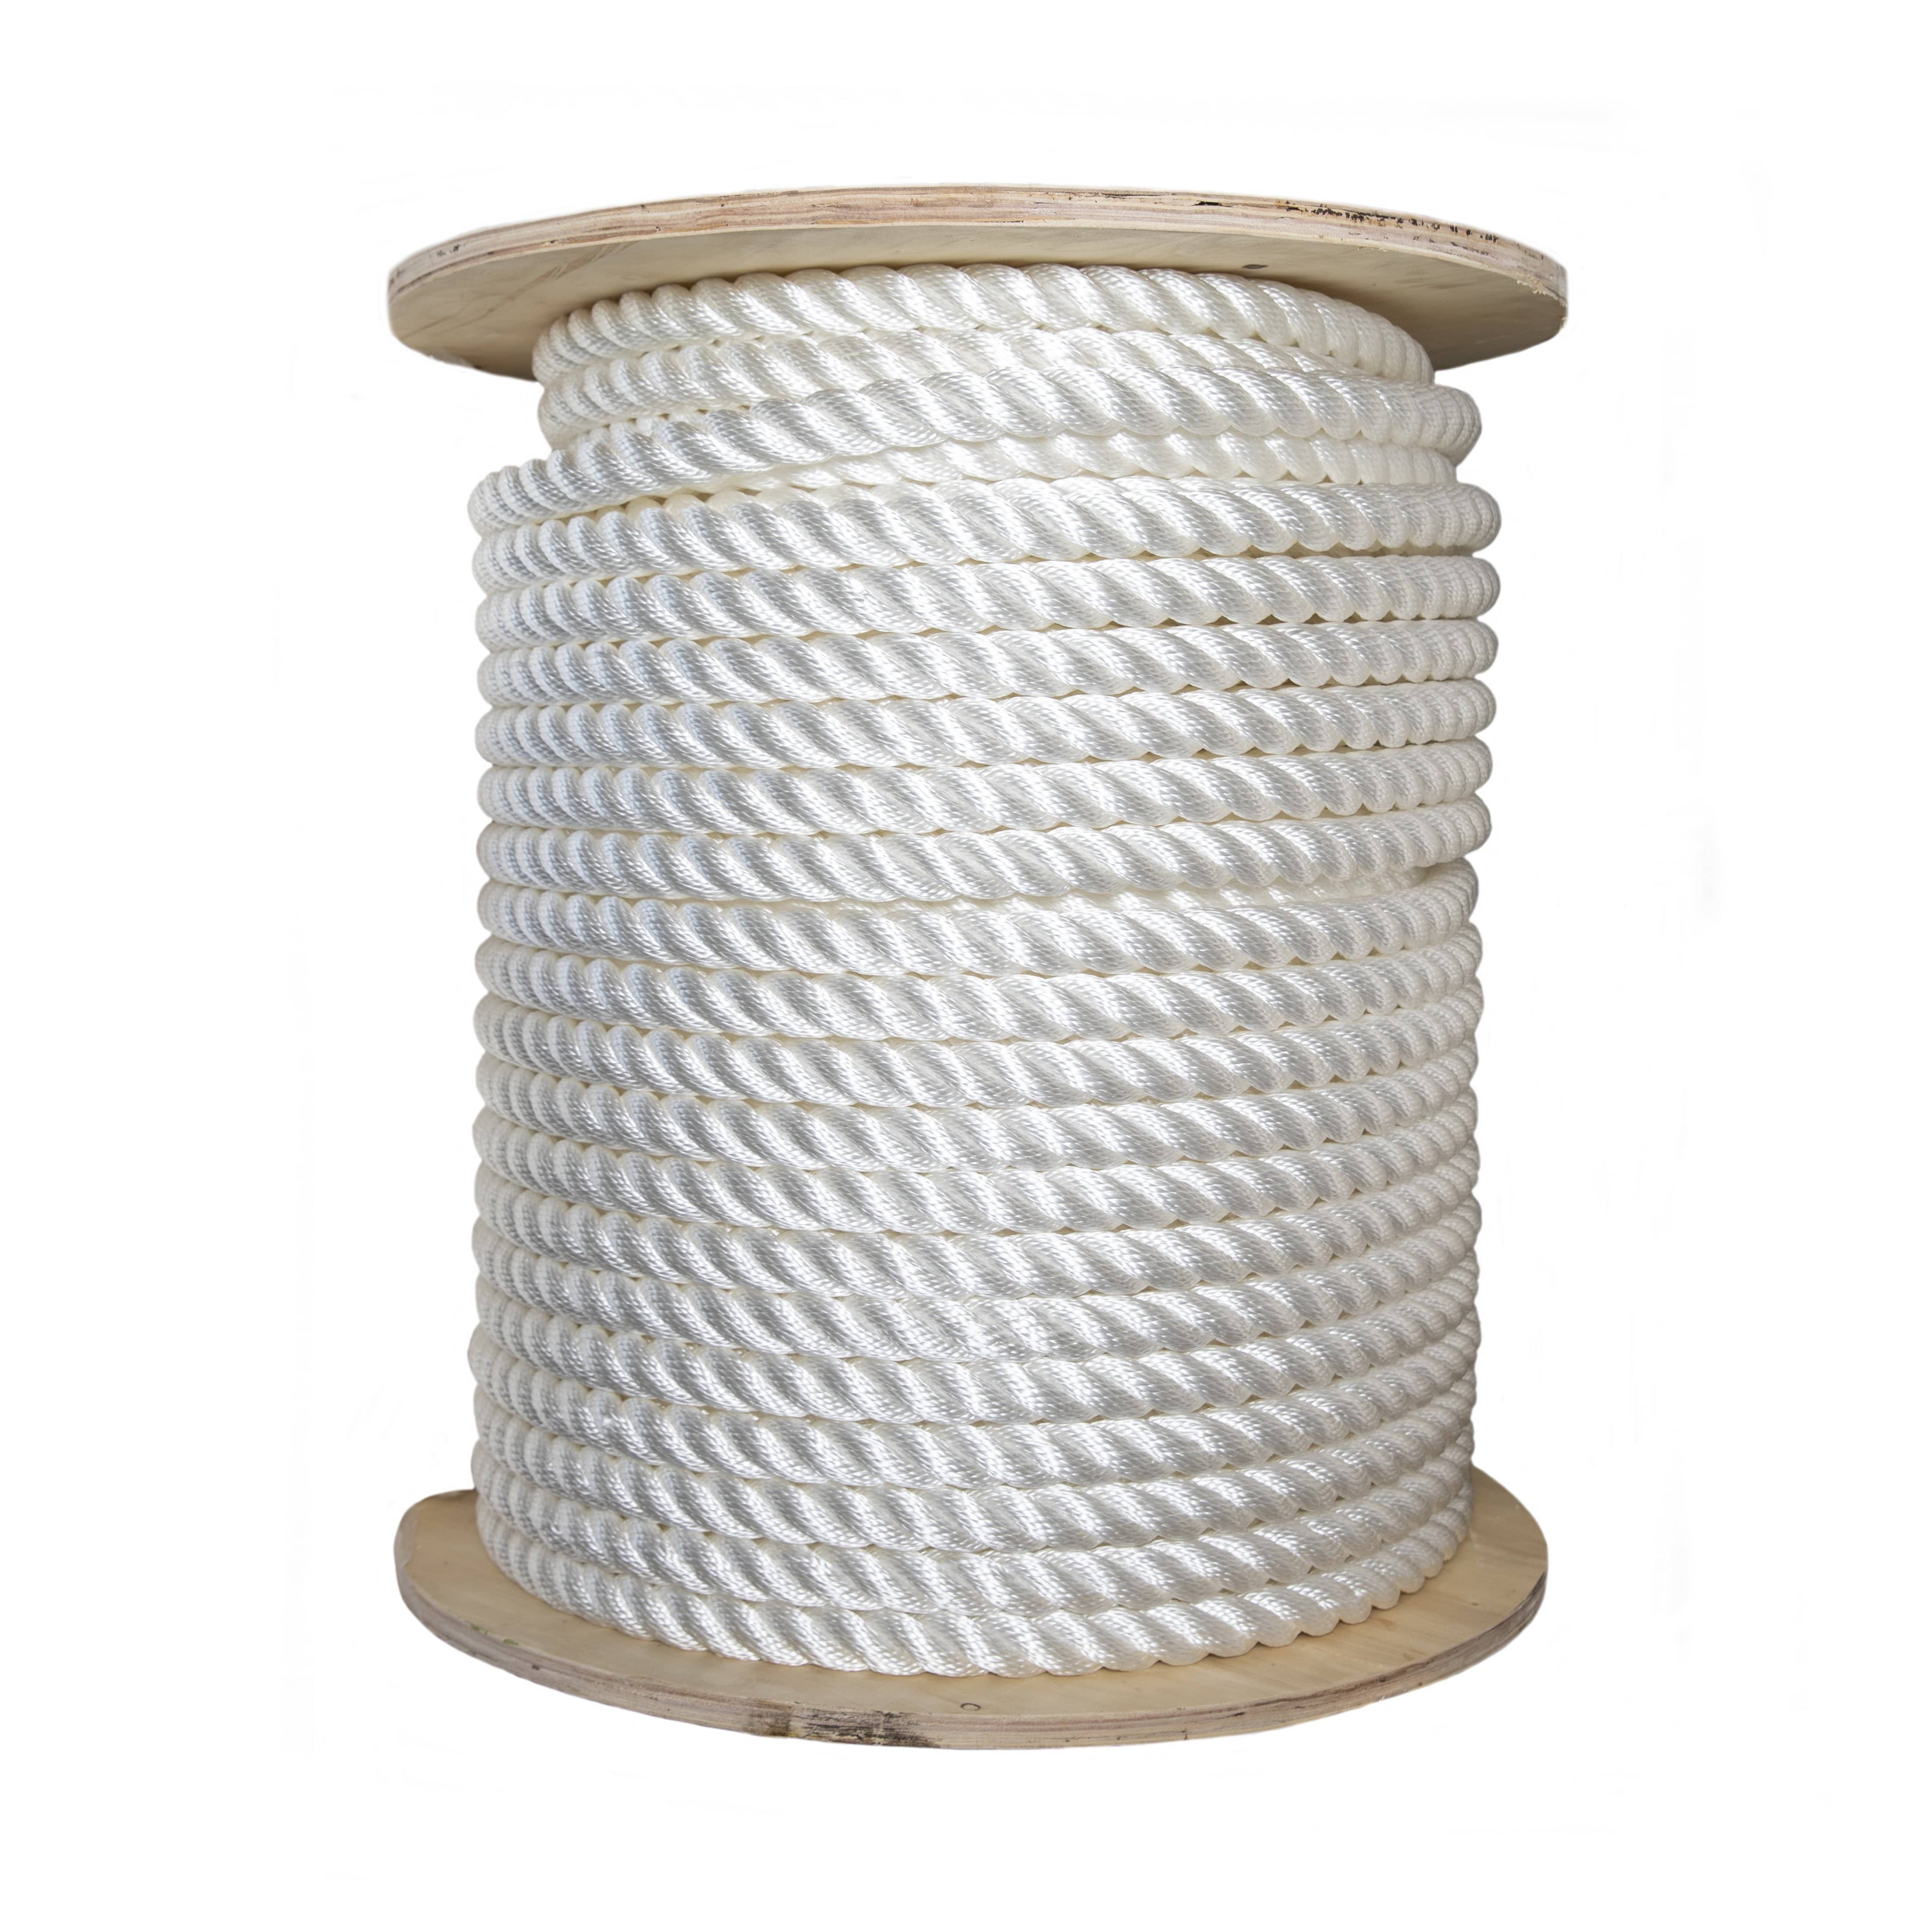 Hyper Tough Item NPP4100-HT, Nylon Blend Twisted Rope, White, 1/4